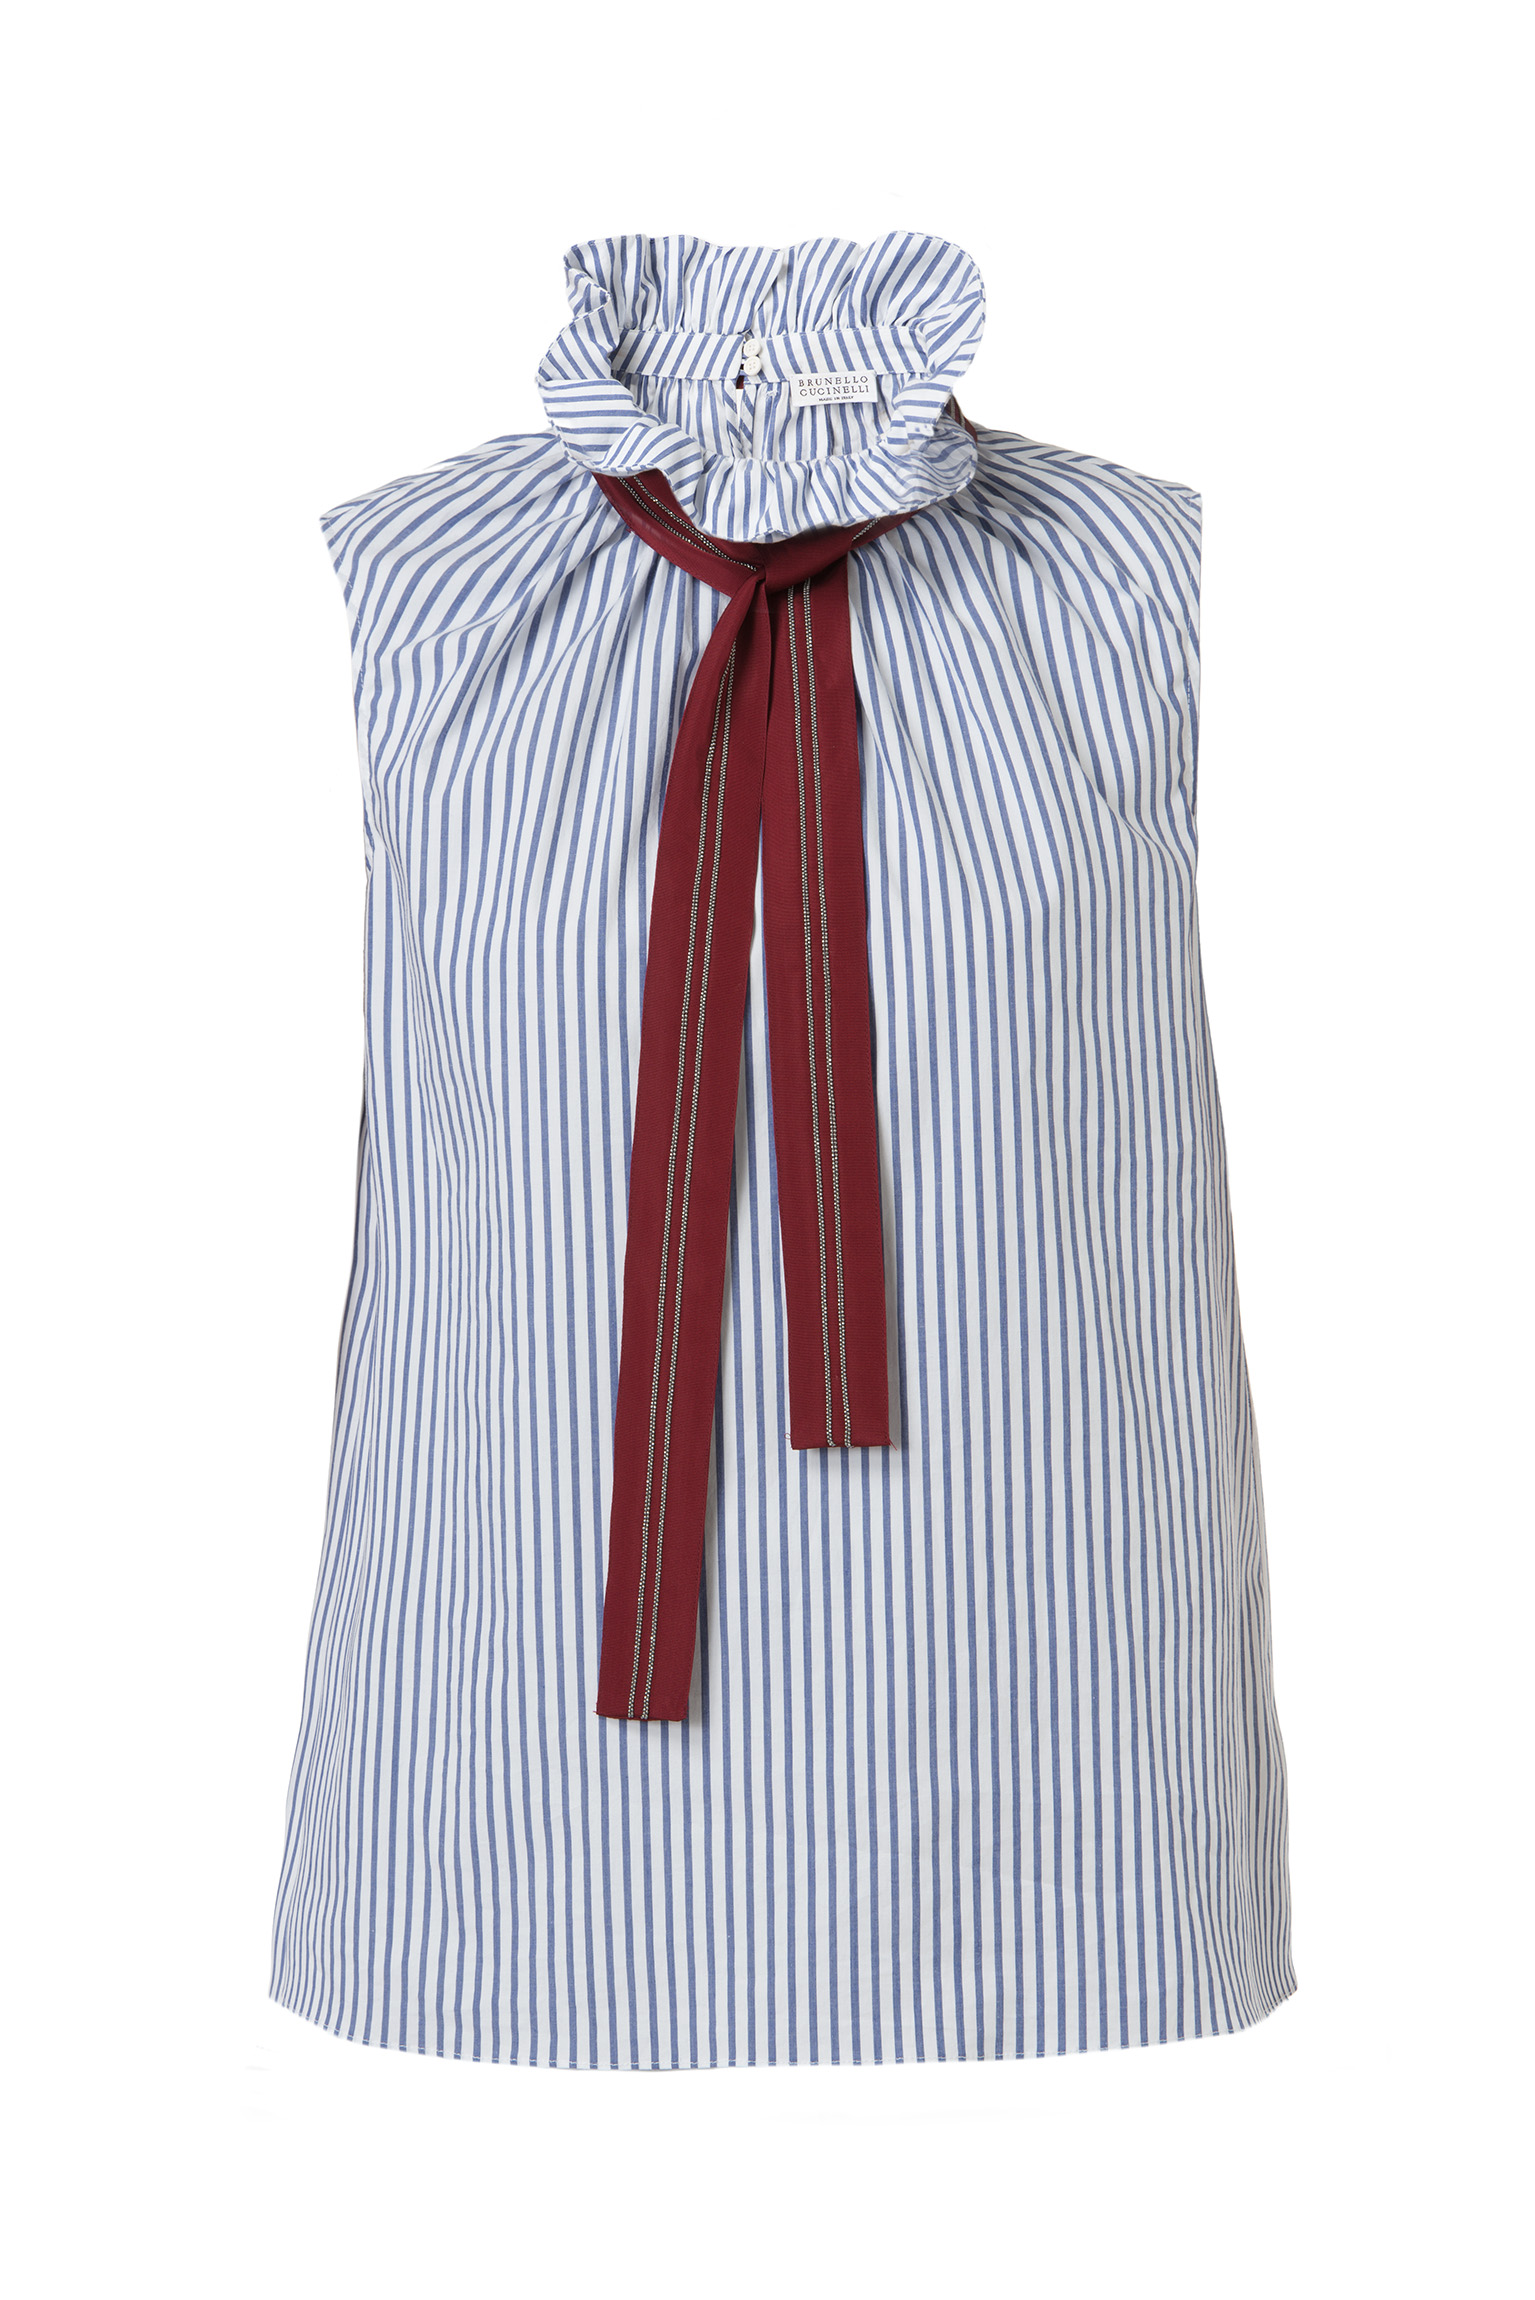 Ruffle collar top in poplin cotton with a grosgrain tie by Brunello Cucinelli 